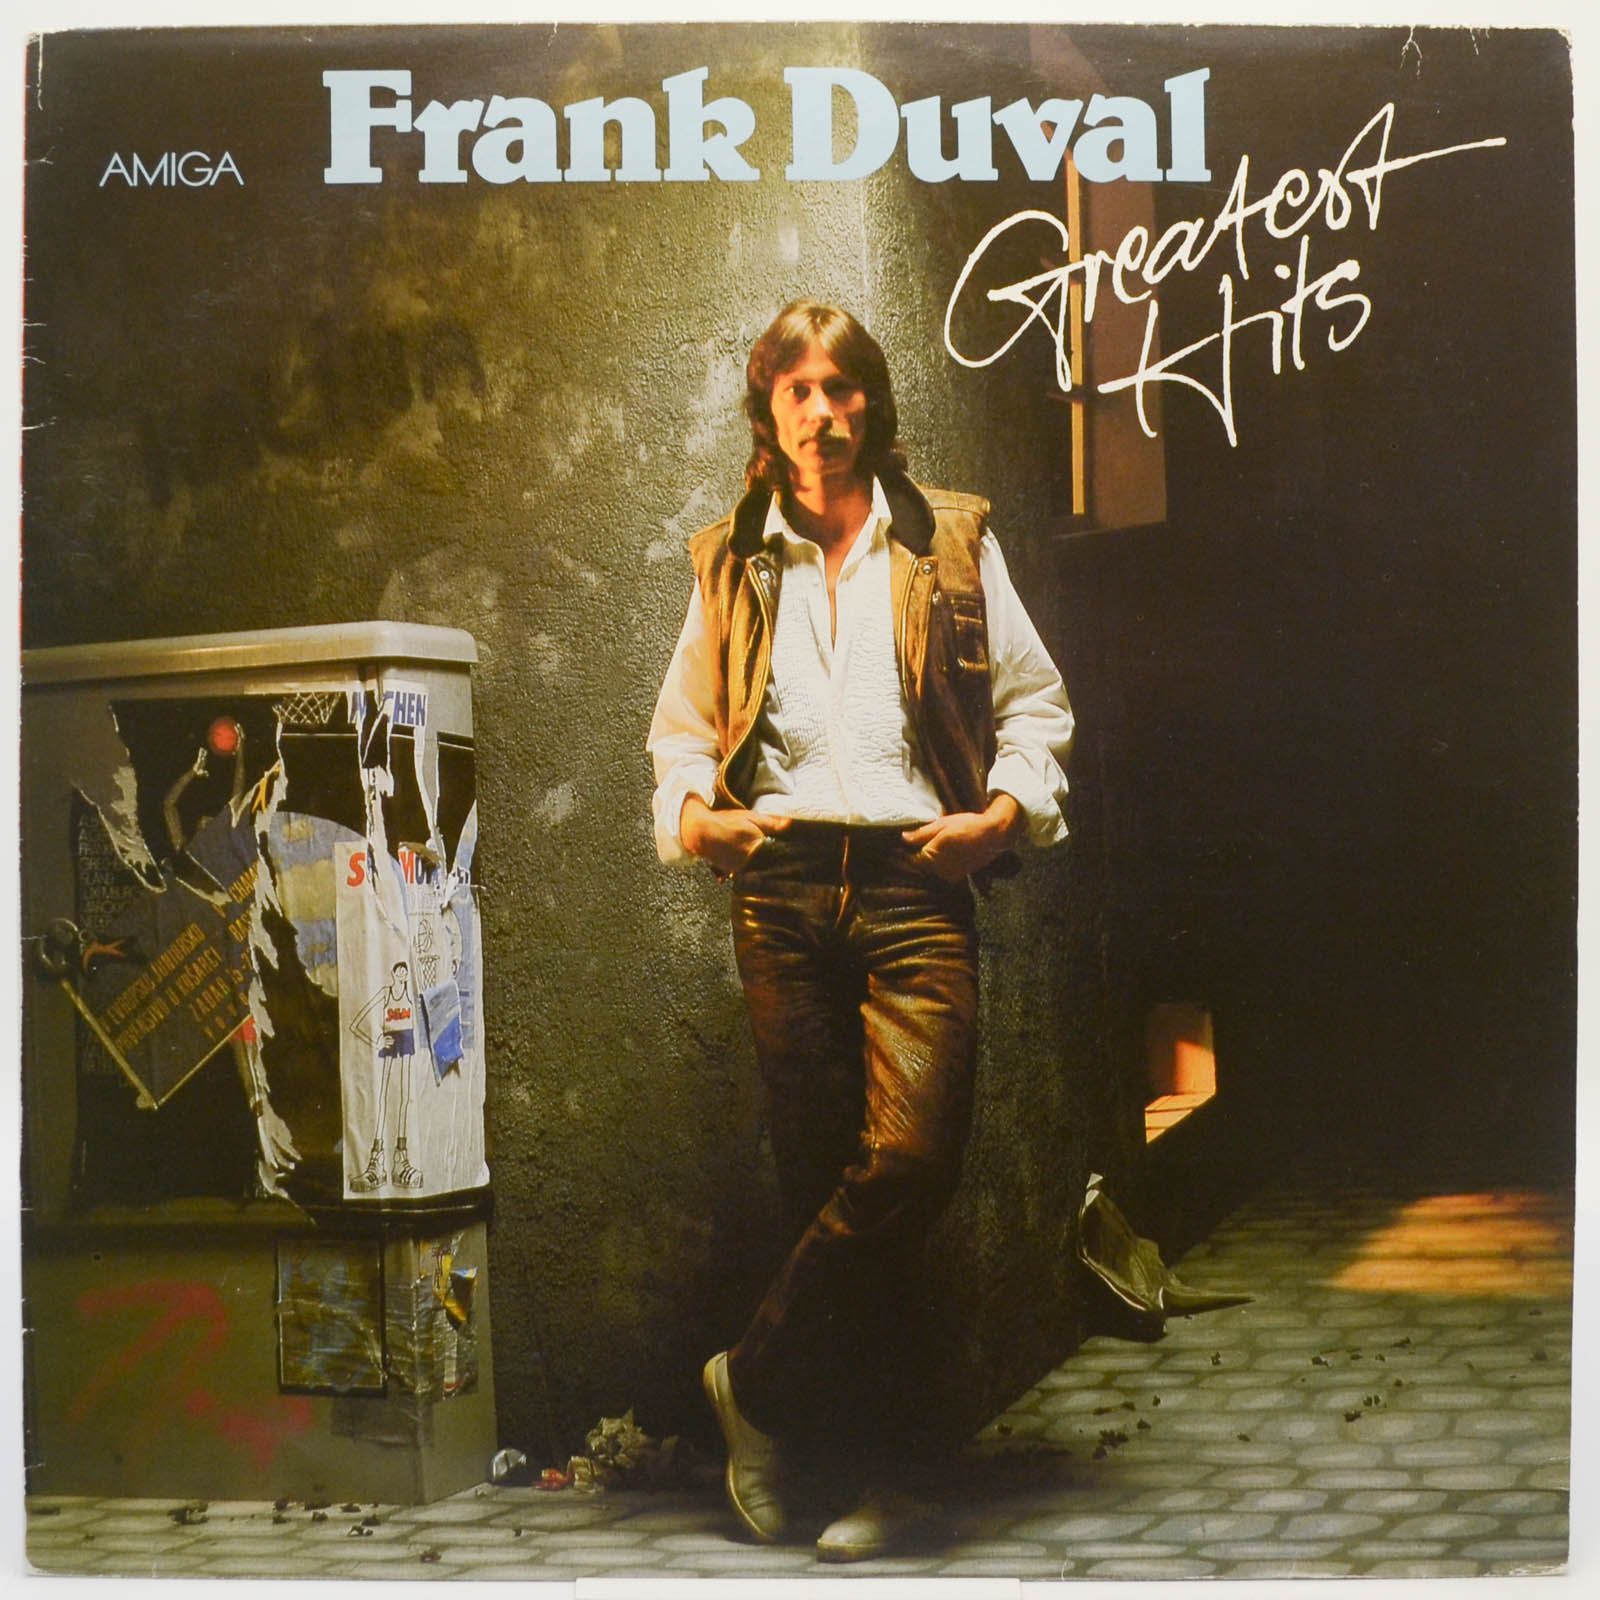 Frank Duval — Greatest Hits, 1982